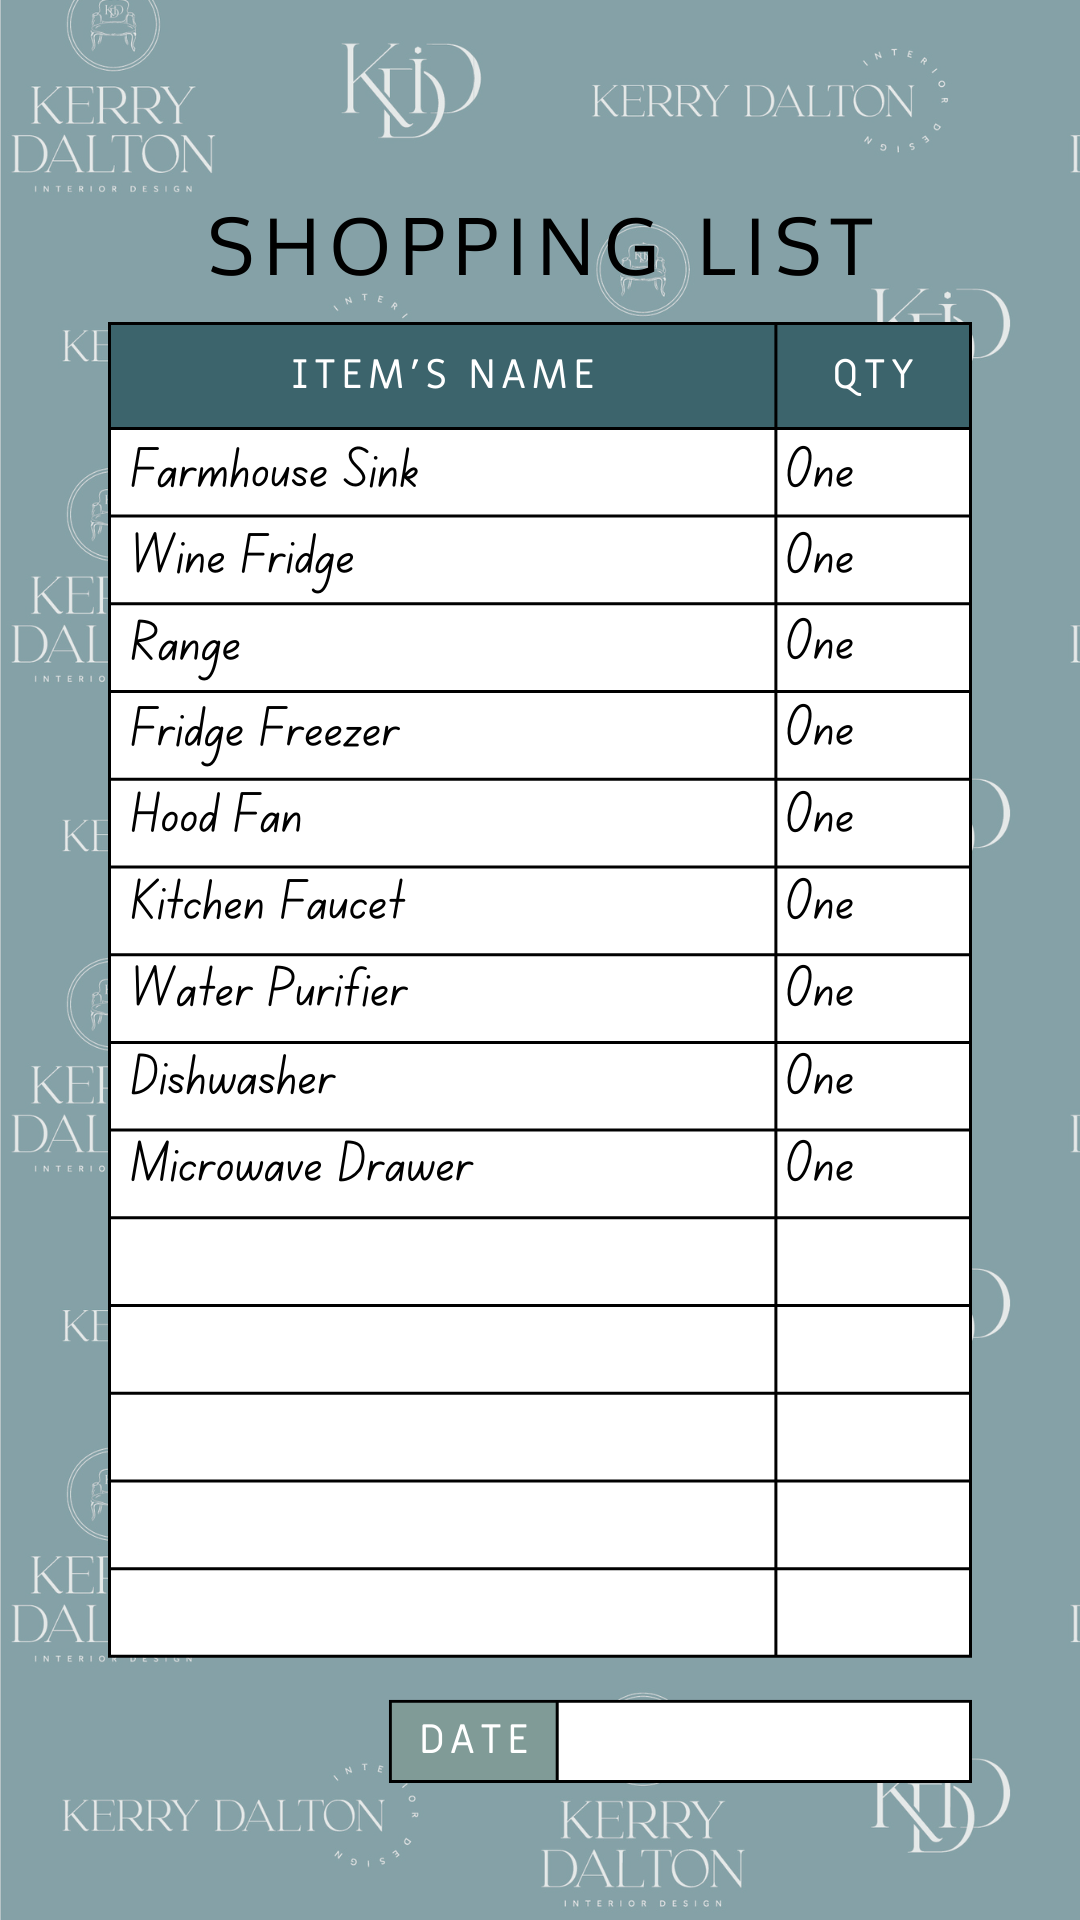 Shopping List for Appliances